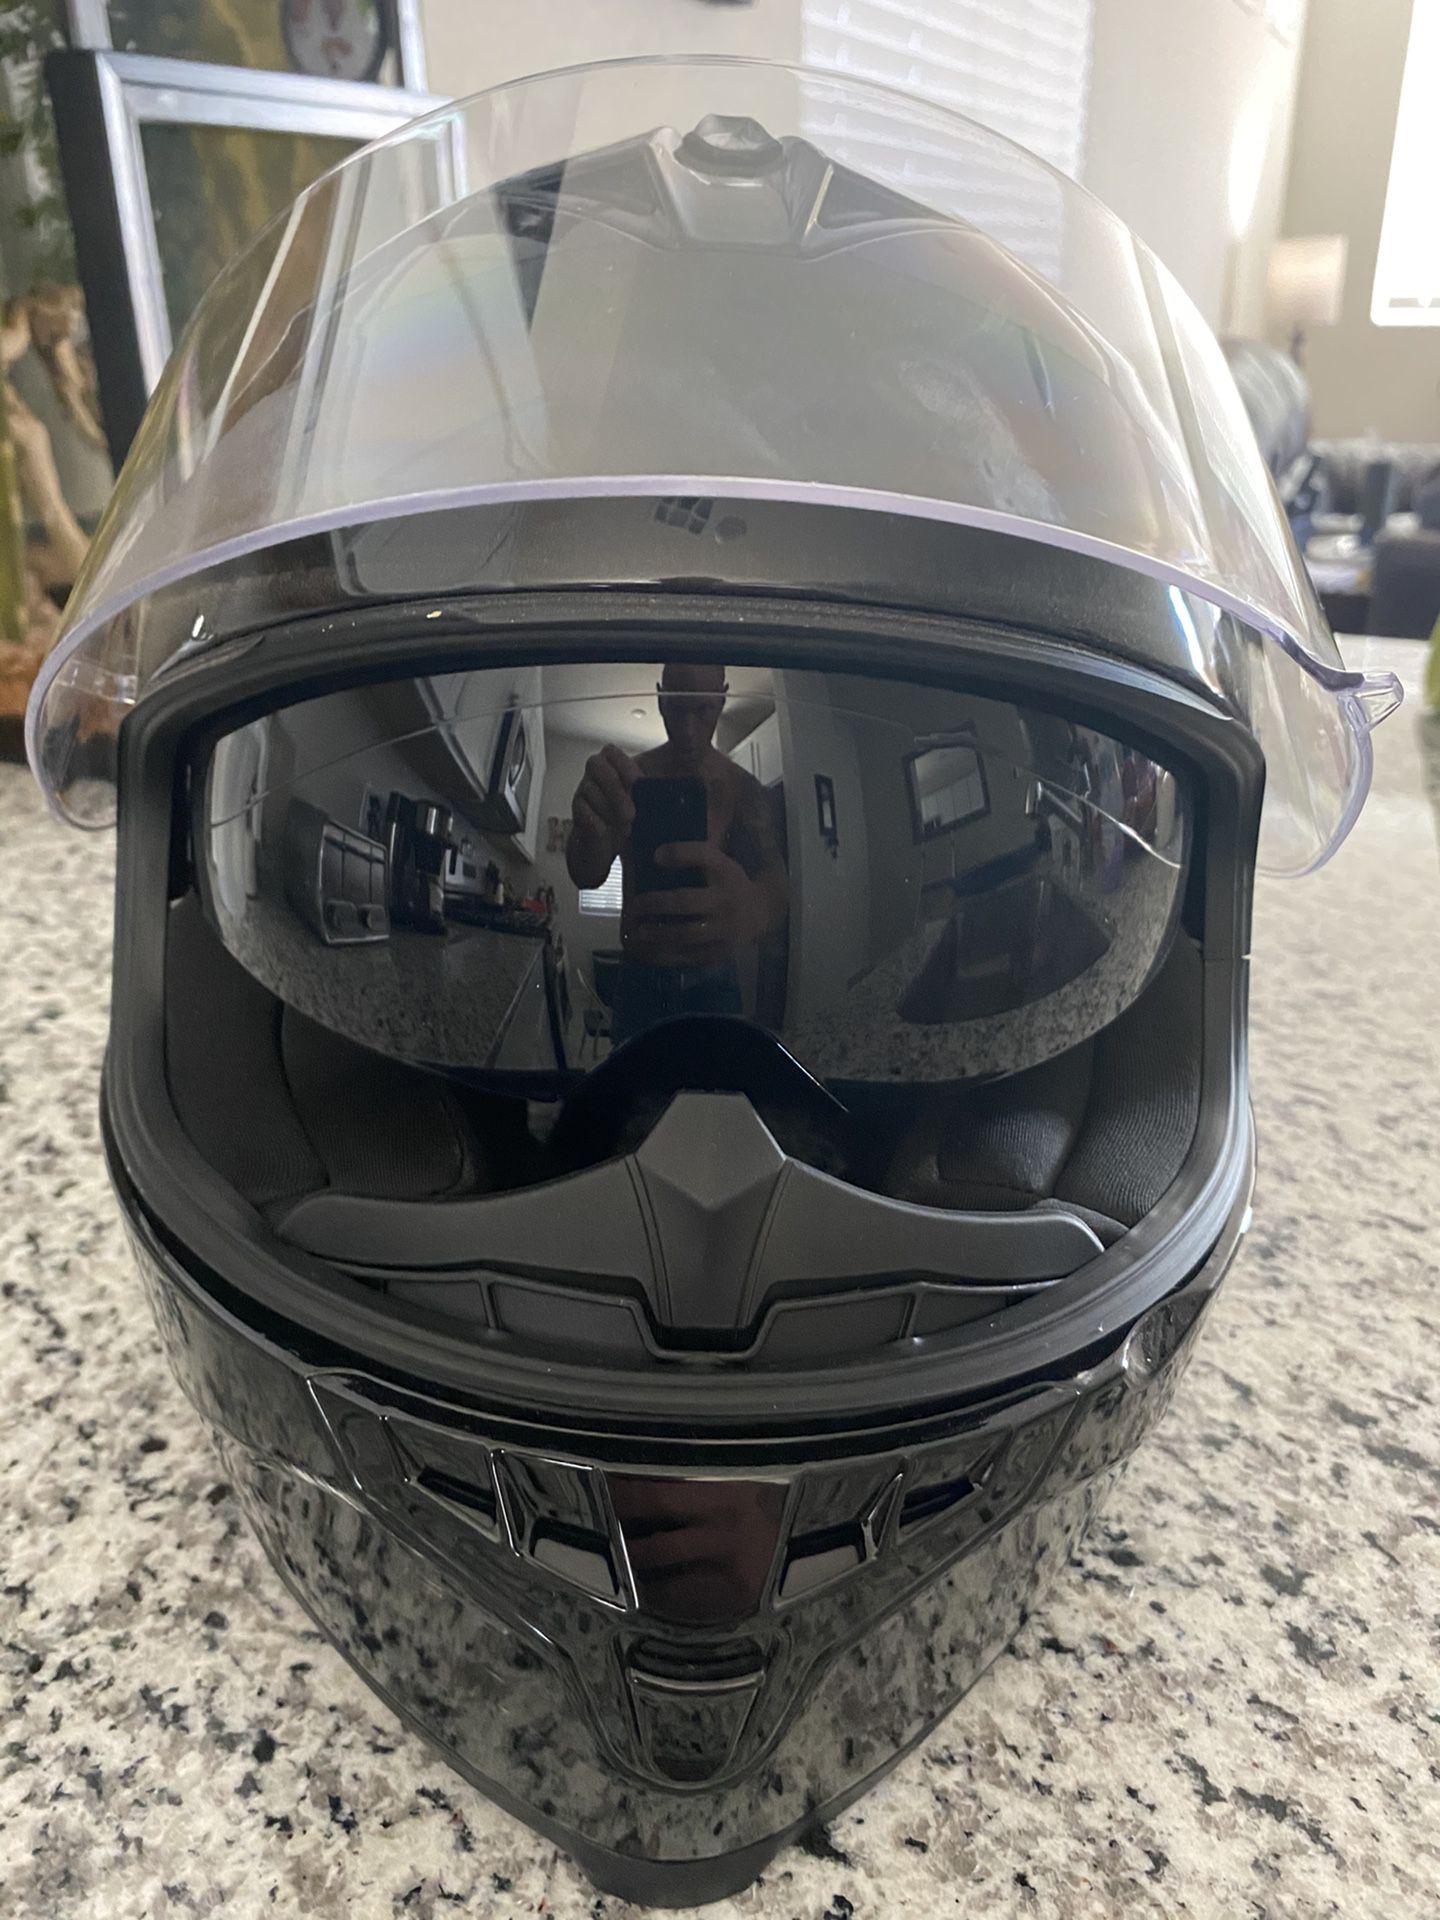 Bilt Force Motorcycle Helmet- Medium